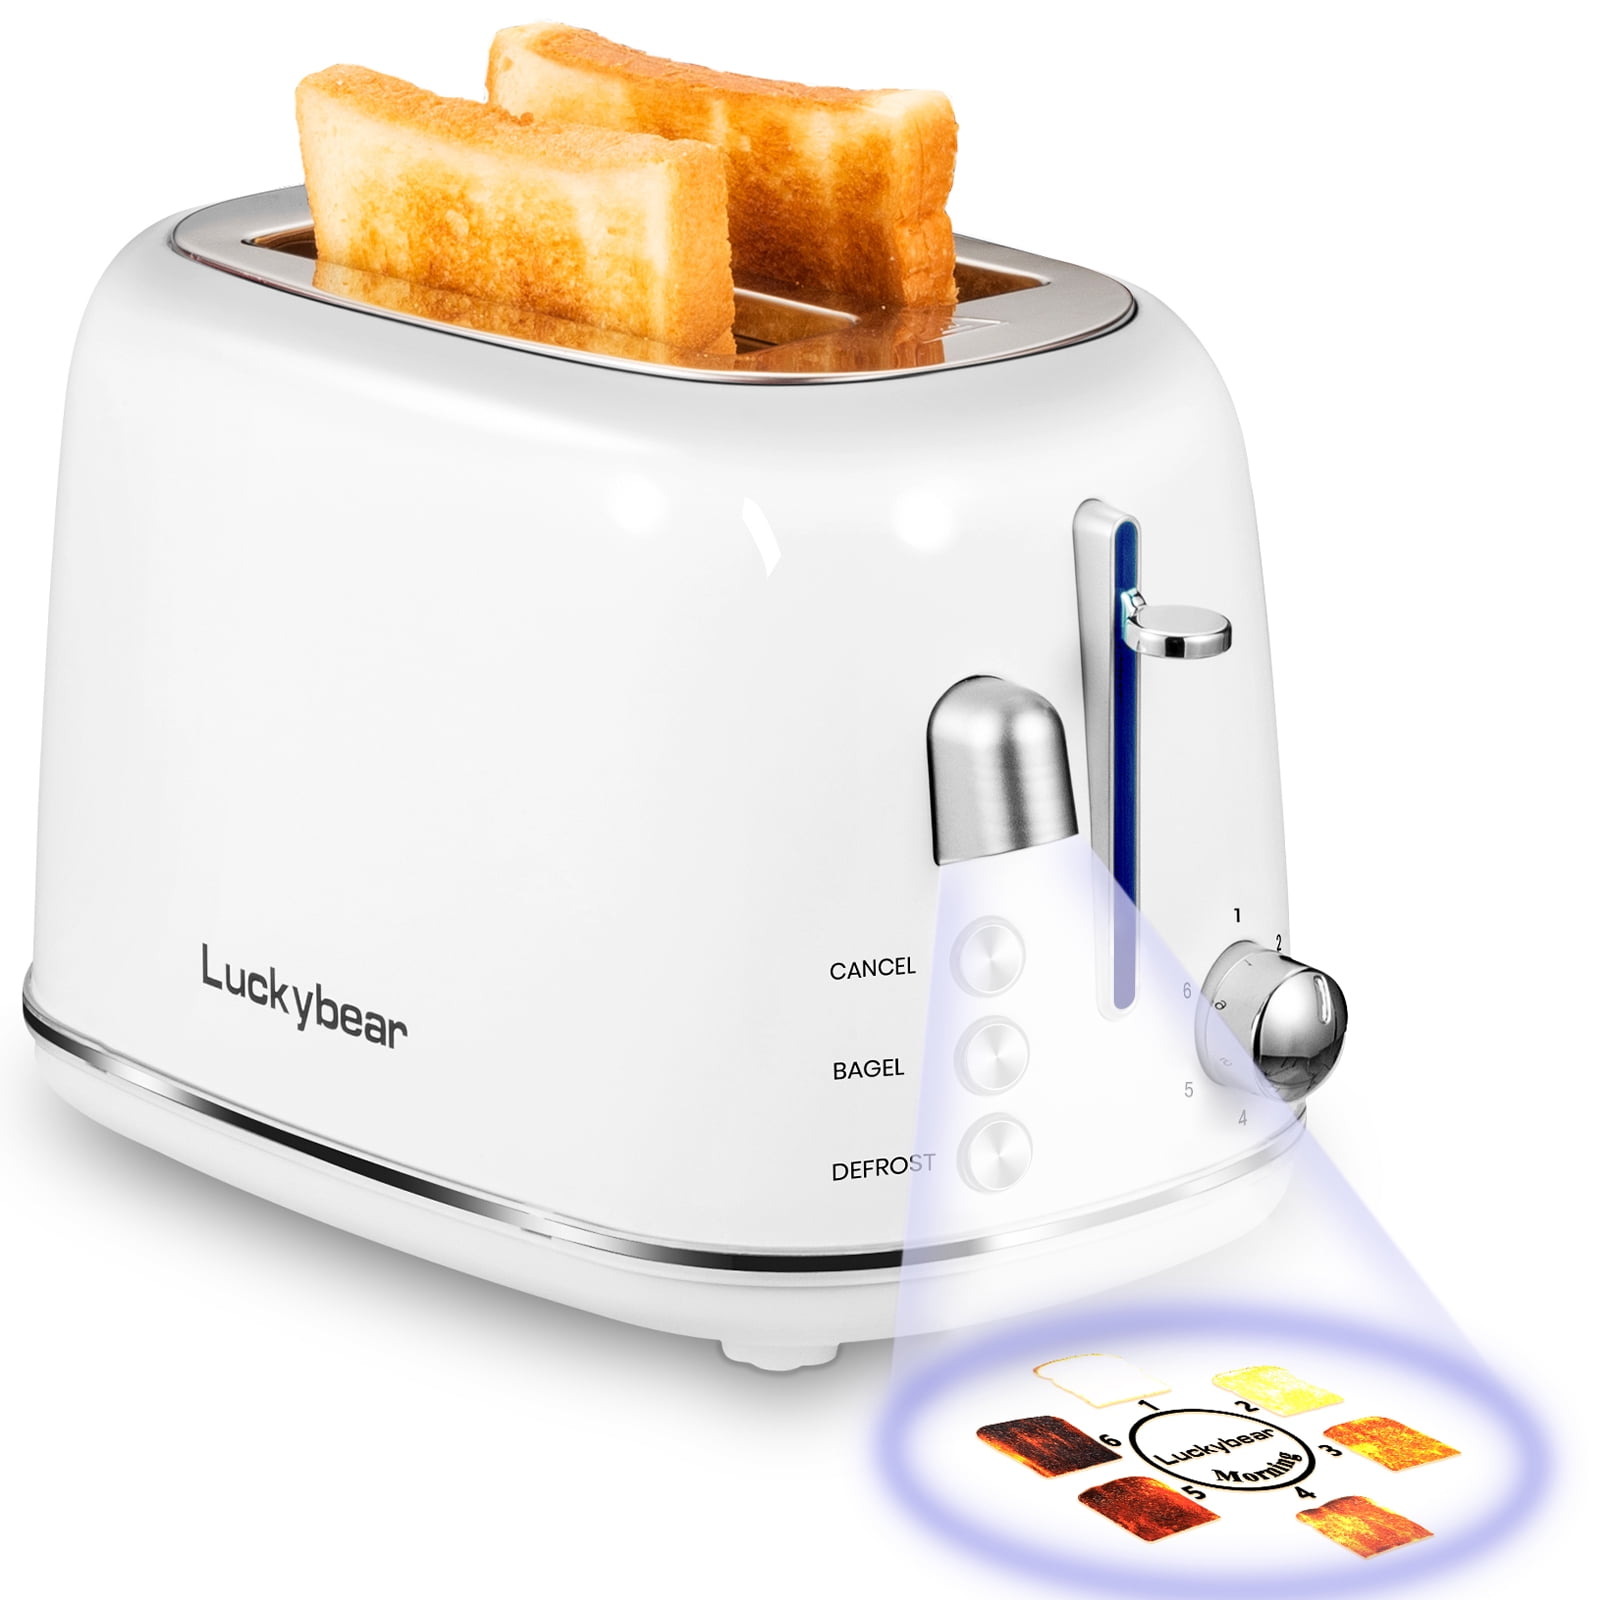 Die-Cast 4-Slice Smart Toaster™